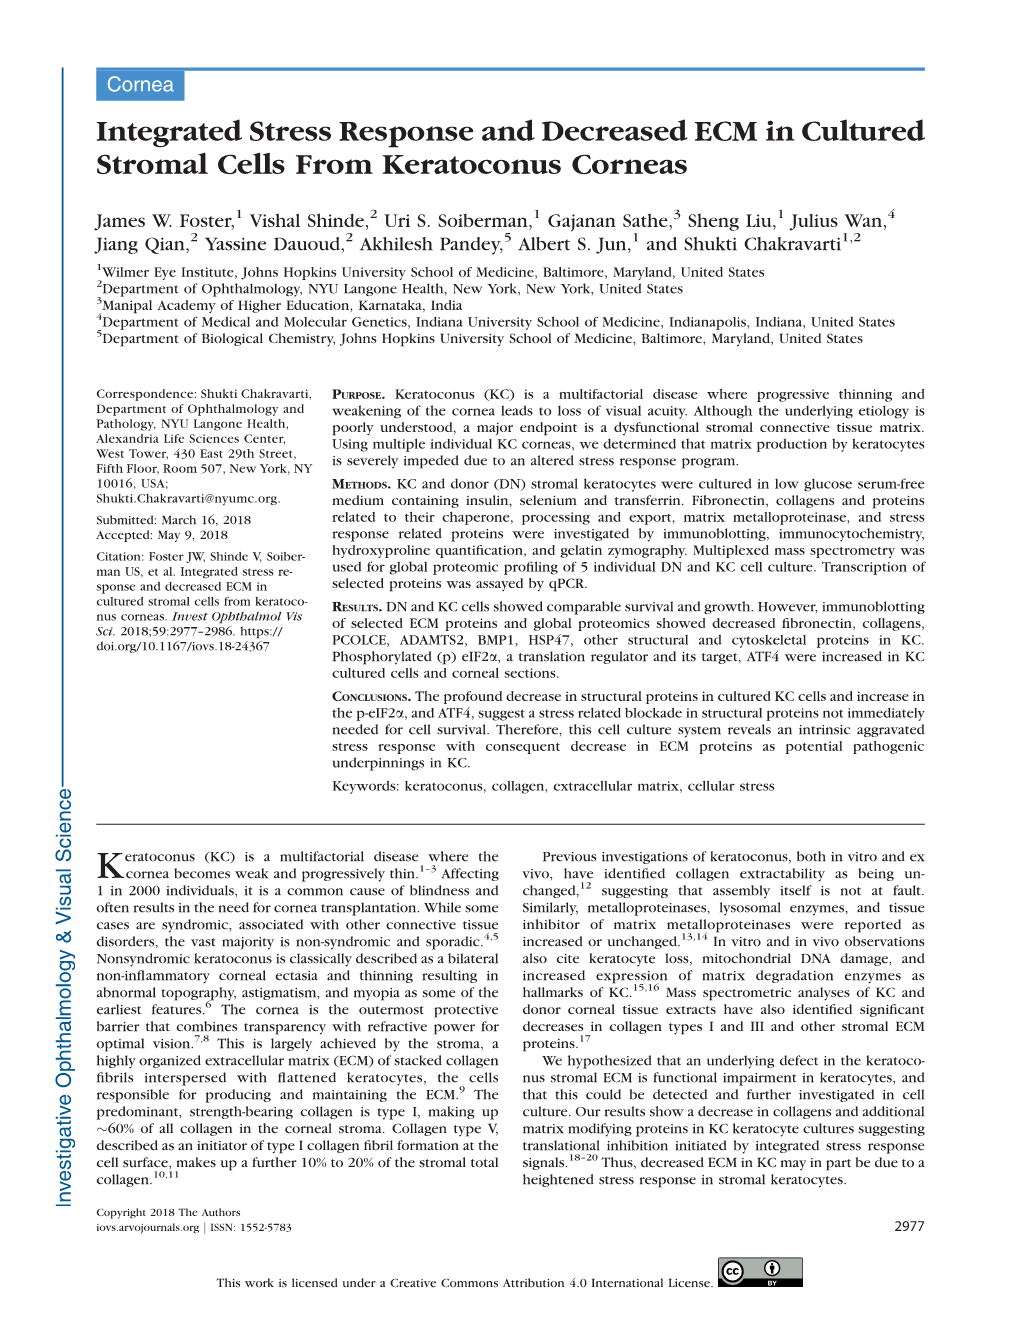 Integrated Stress Response and Decreased ECM in Cultured Stromal Cells from Keratoconus Corneas